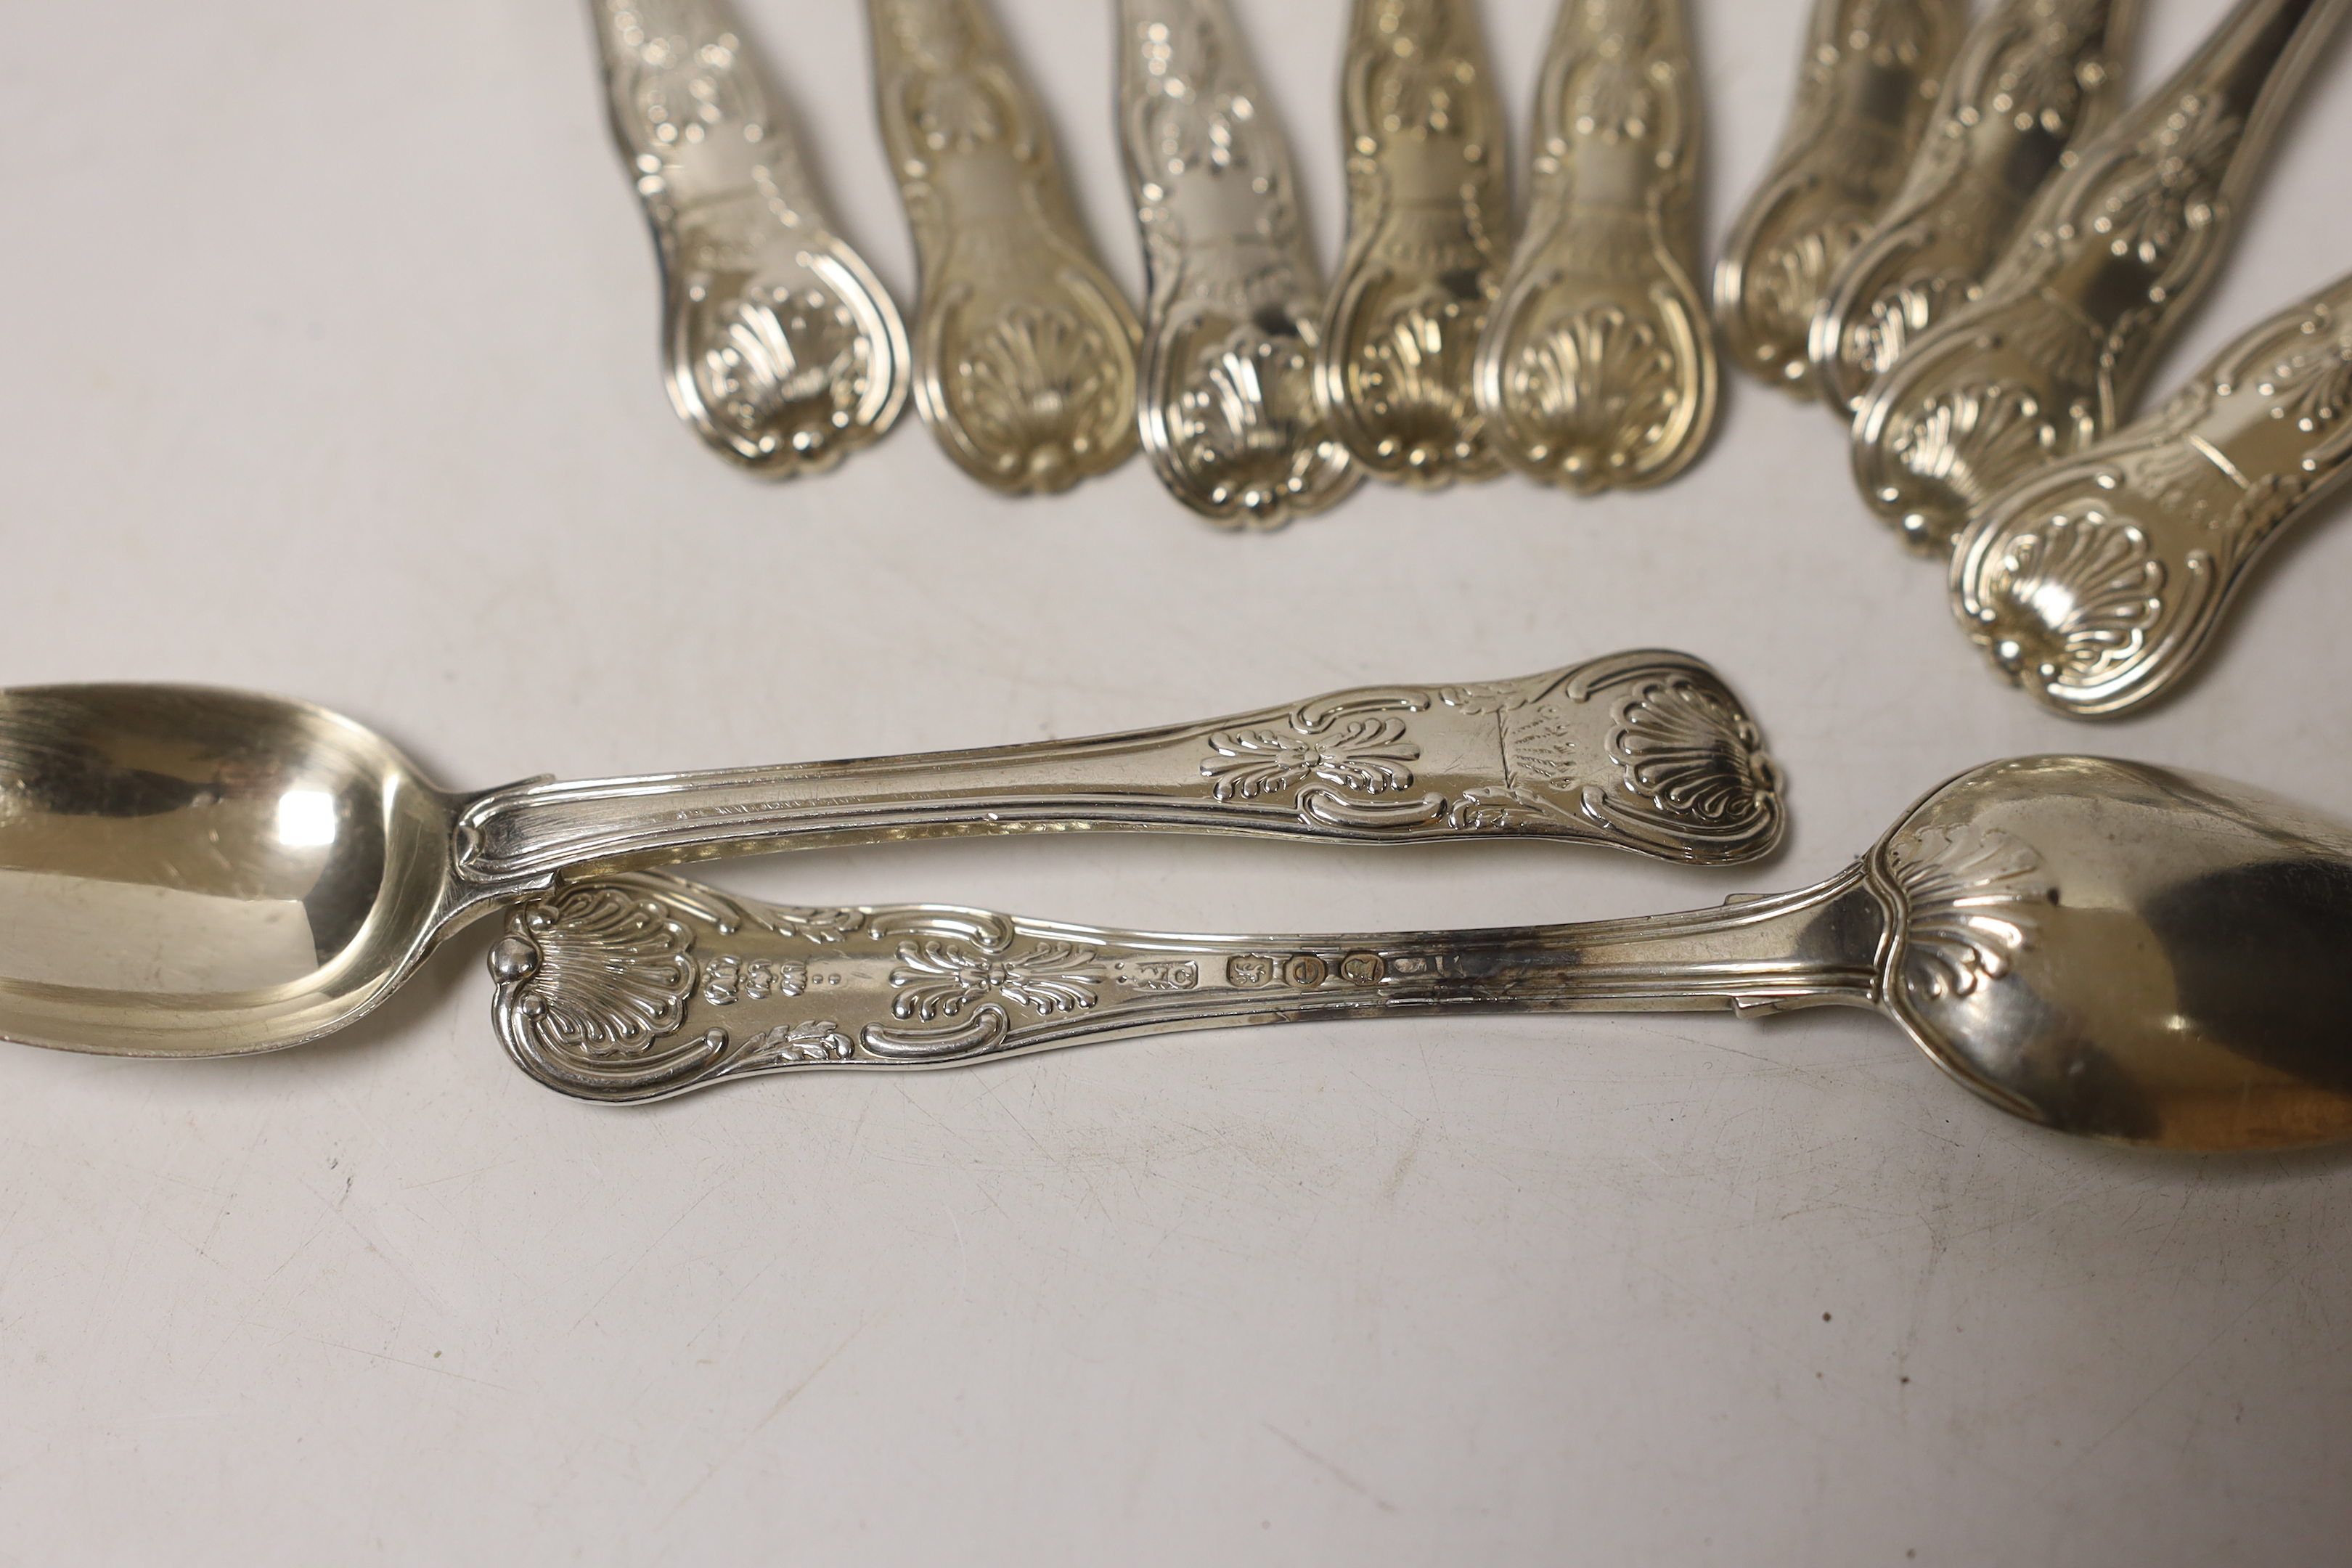 Eleven George IV silver Kings honeysuckle pattern teaspoons, William Chawner II, London, 1820, 12.8oz, with engraved crest.